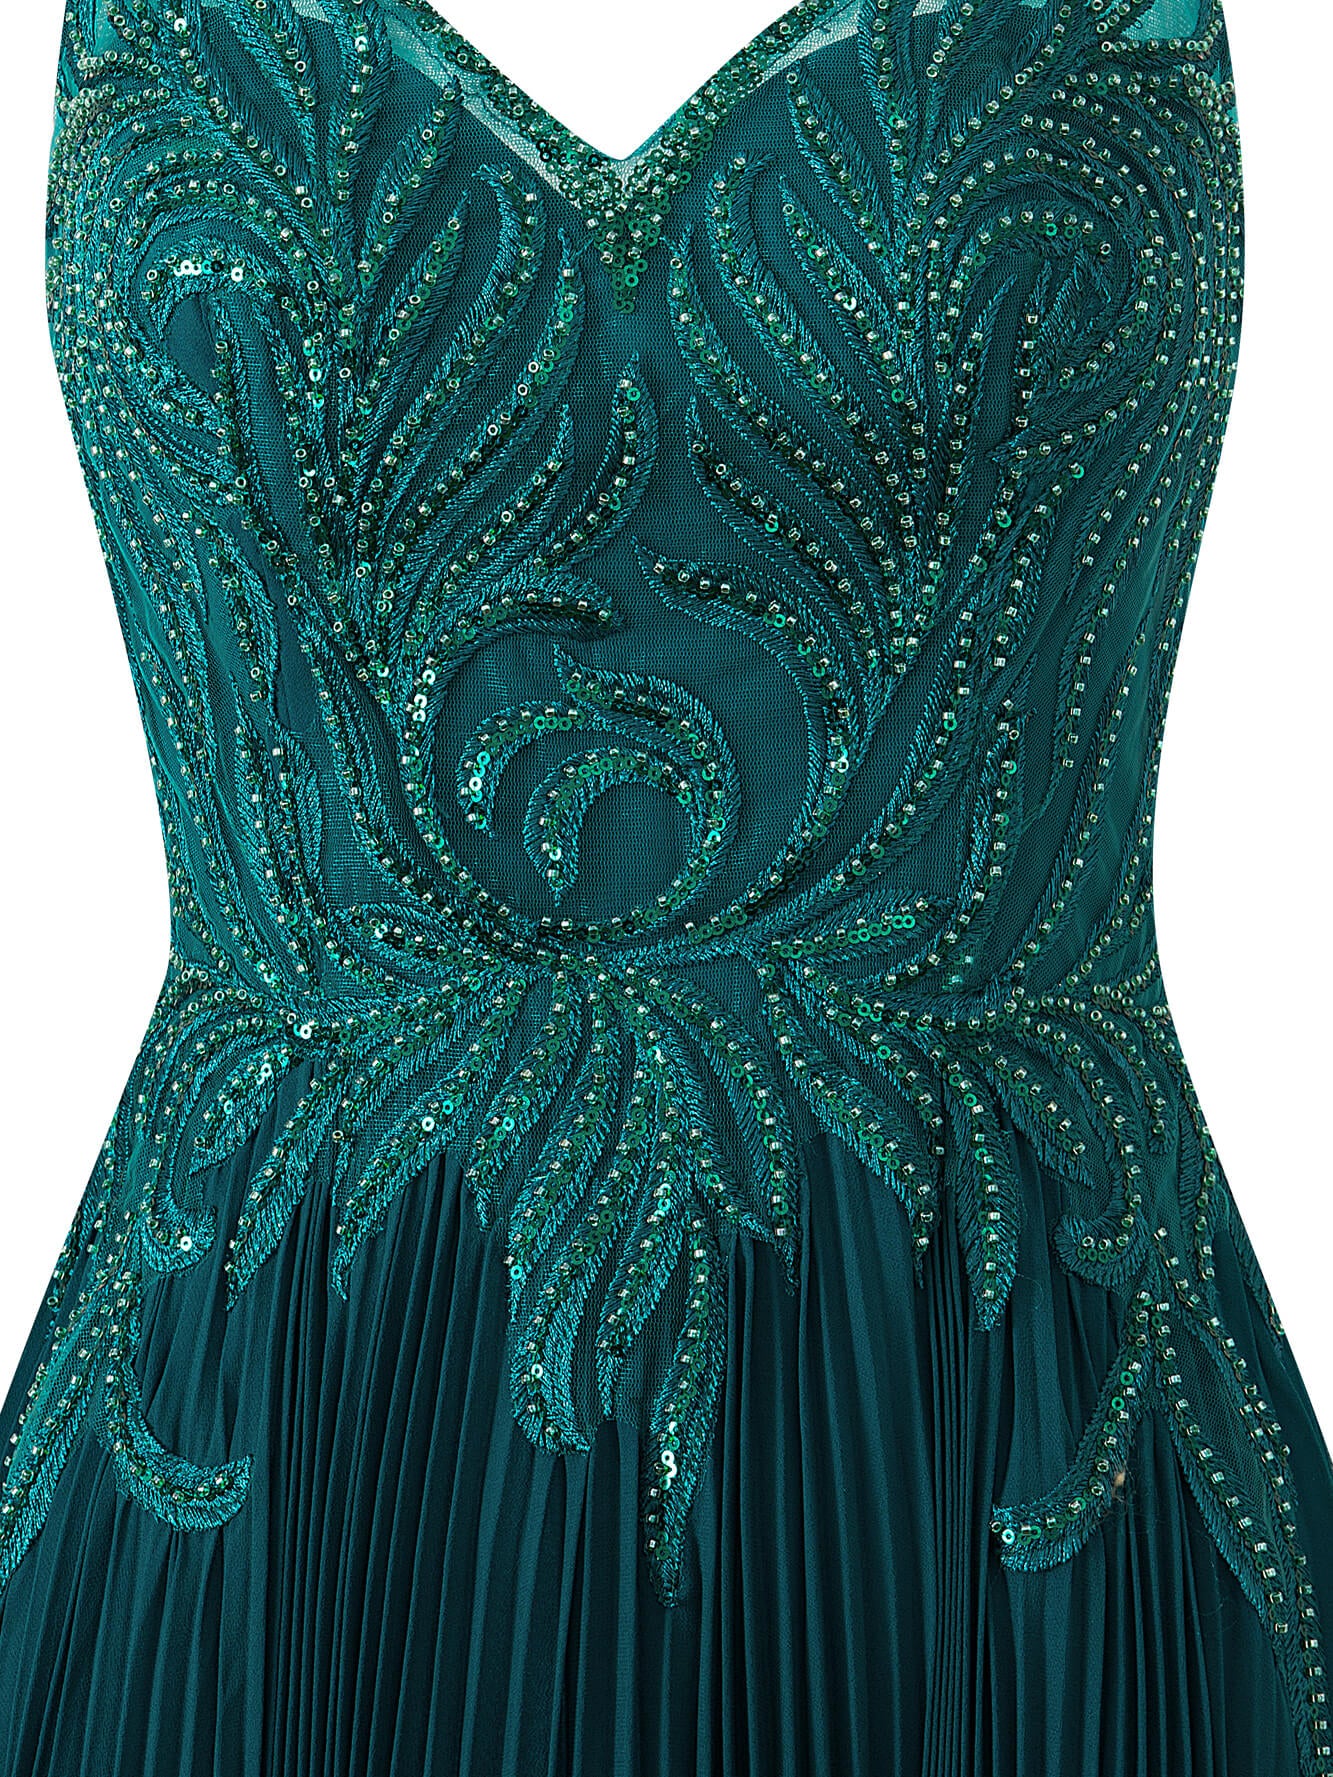 Abigail Dark Green | A-line V-neck Chiffon Prom Dress